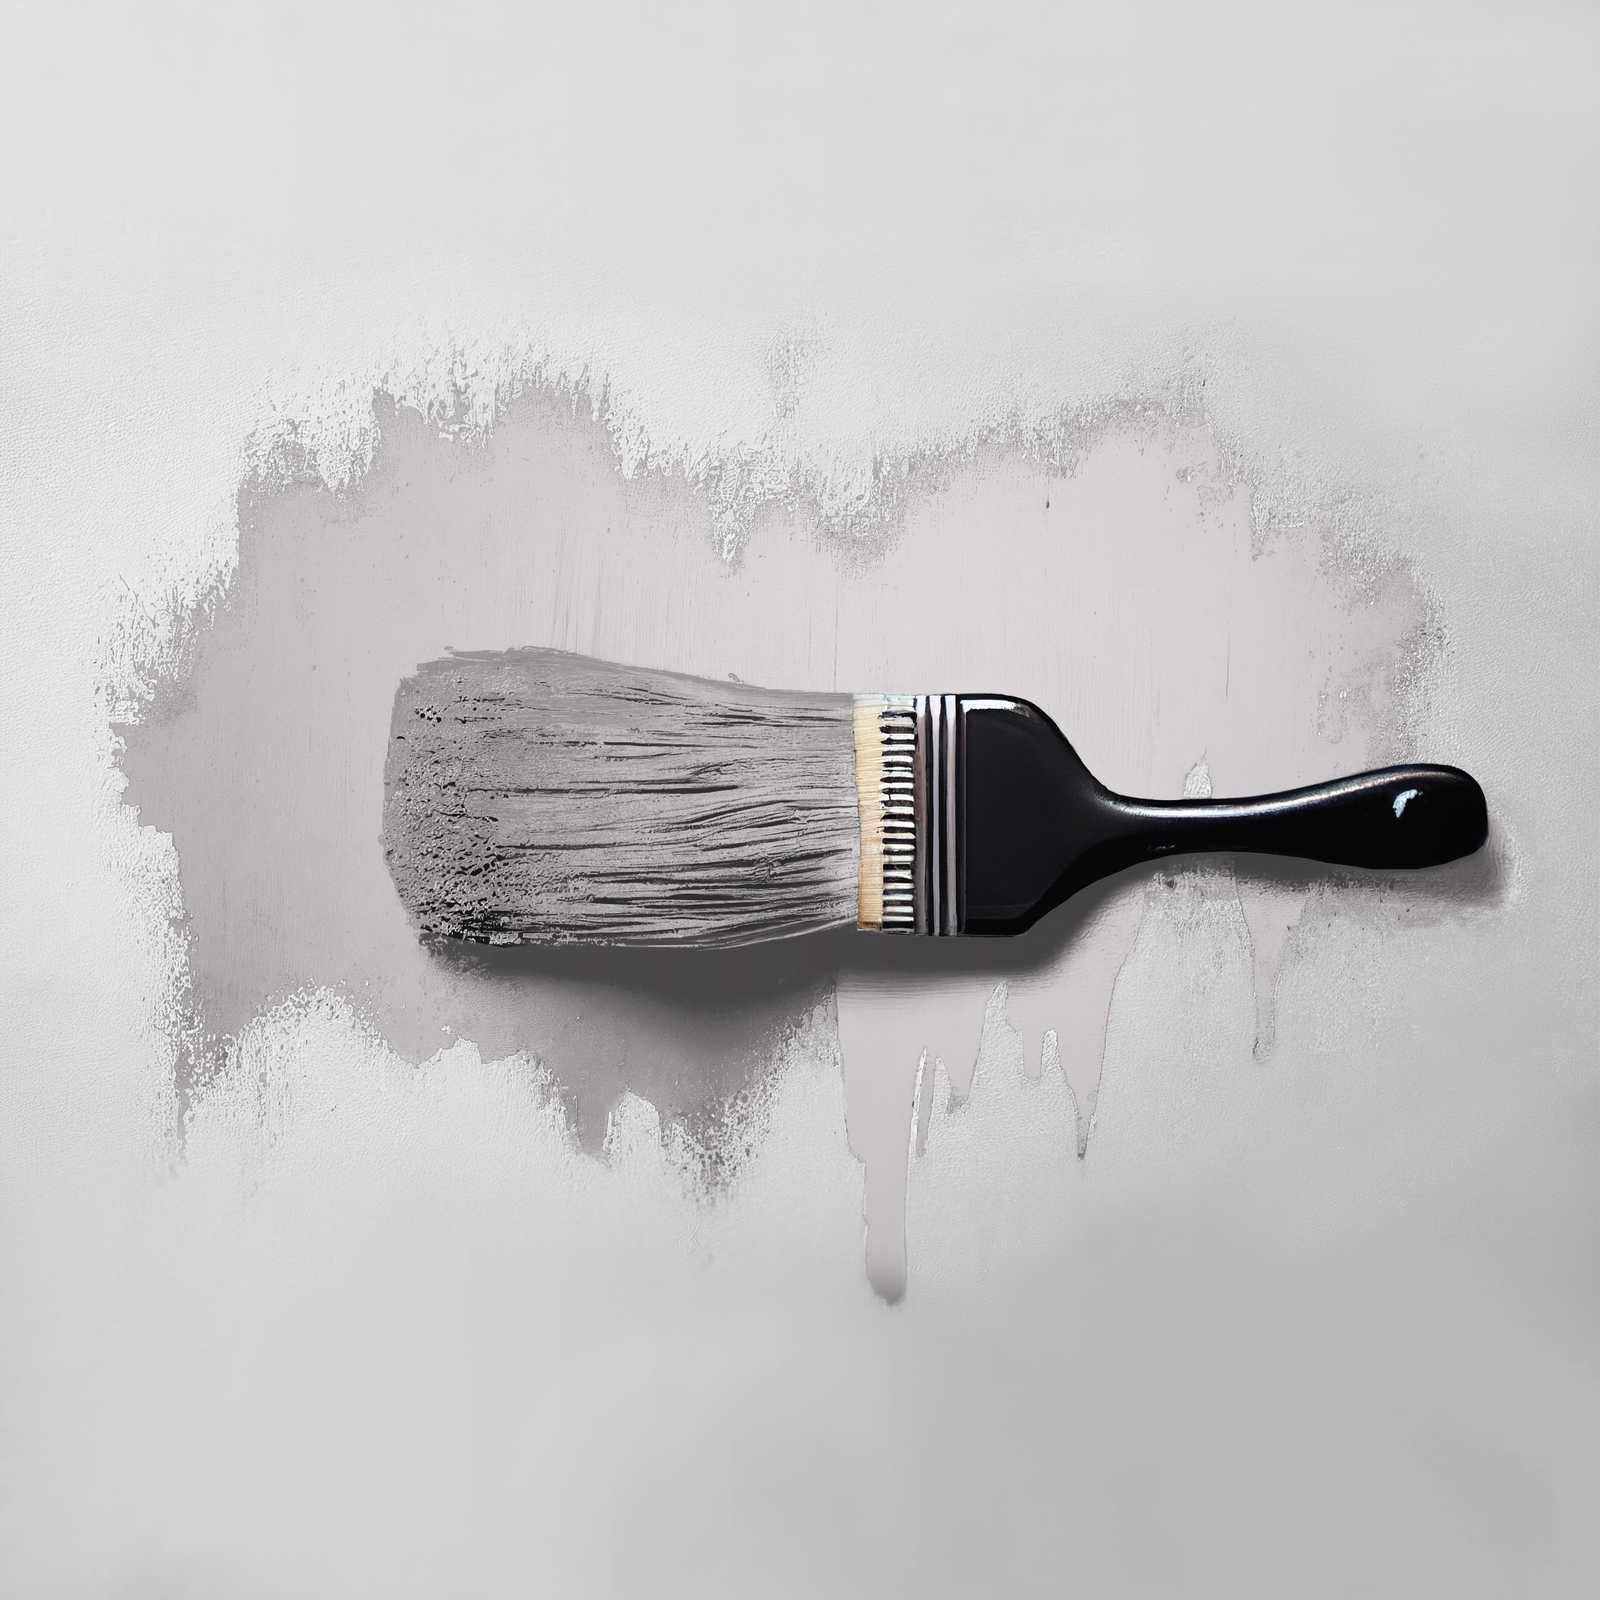             Wall Paint TCK2001 »Salty Shrimp« in warm light grey – 5.0 litre
        